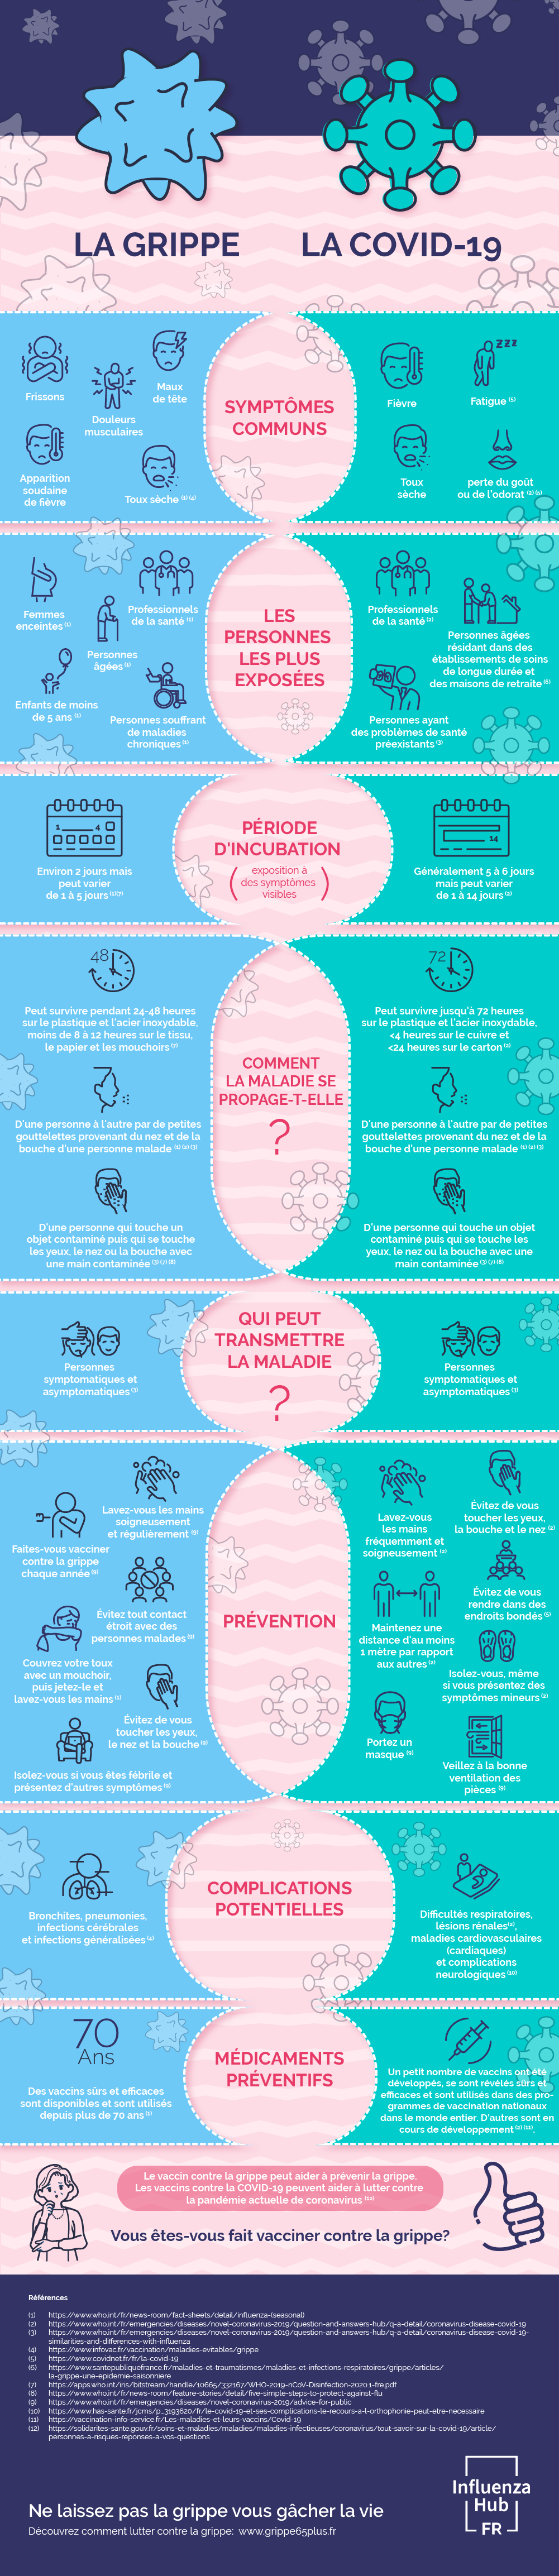 flu_covid_infographic_FR